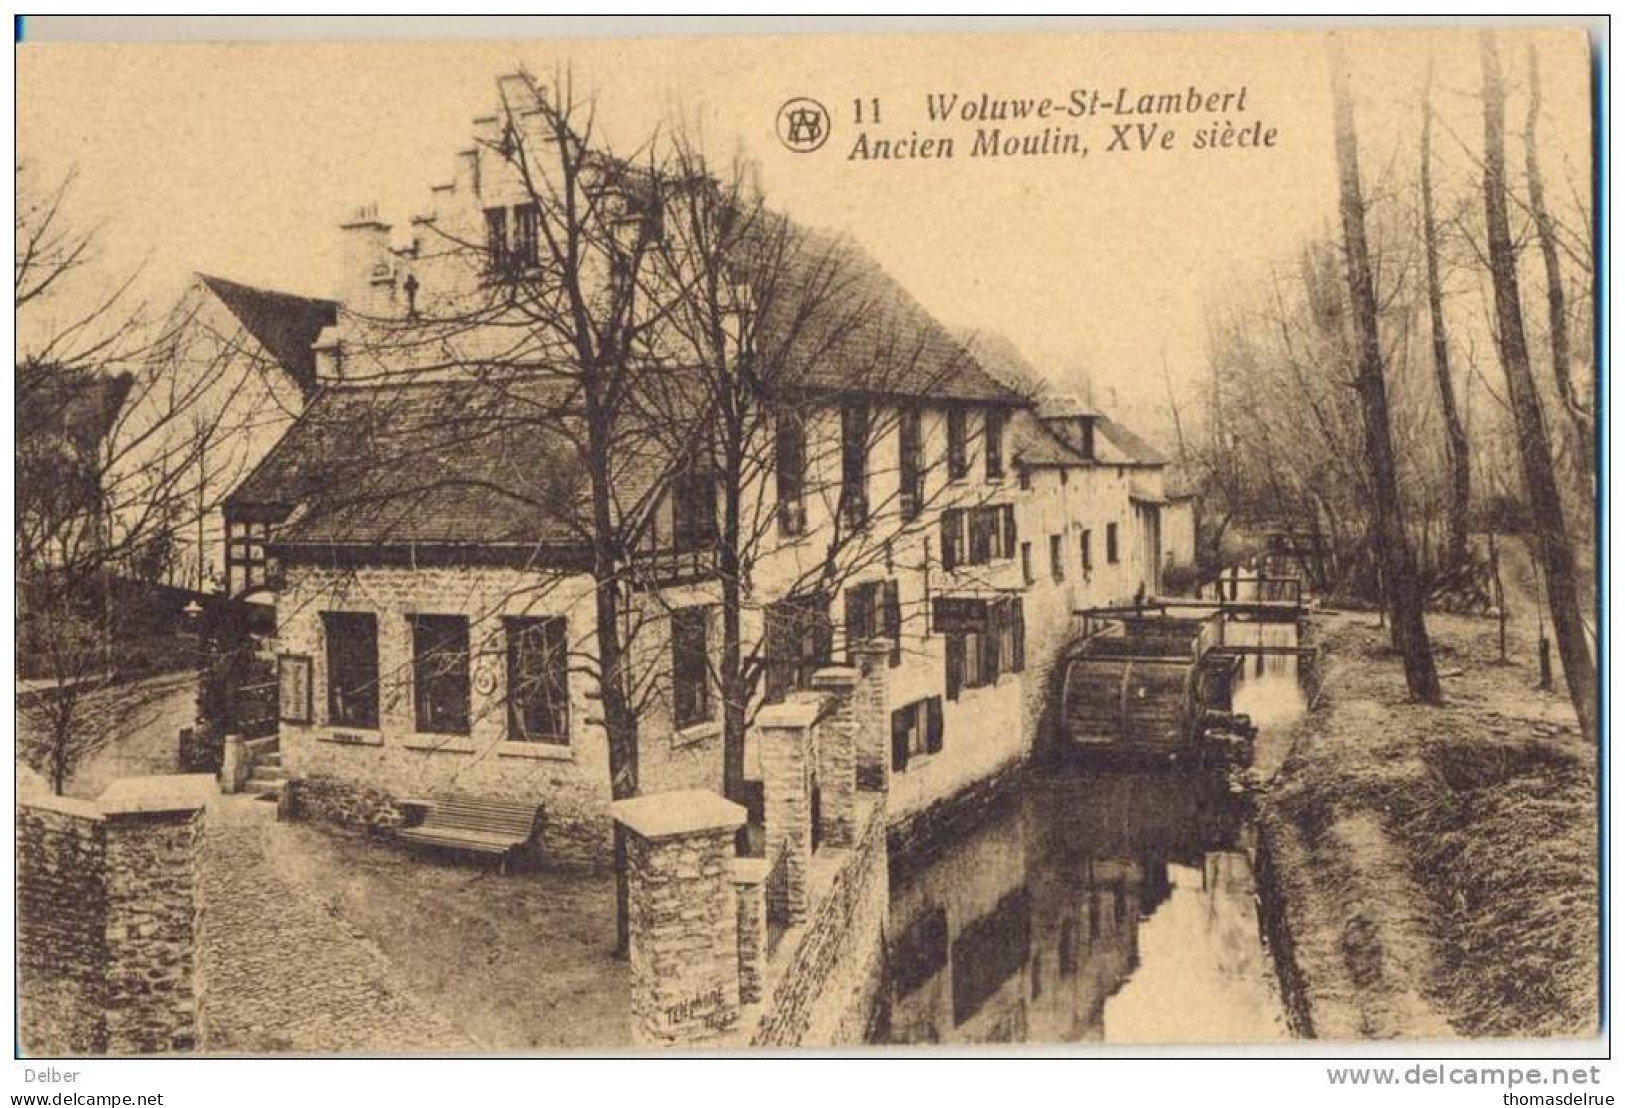 _Np184:11 Woluwe-St-Lambert Ancien Moulin, XVe Siècle Clihé F. Walschaerts, Bruxelles - Woluwe-St-Lambert - St-Lambrechts-Woluwe